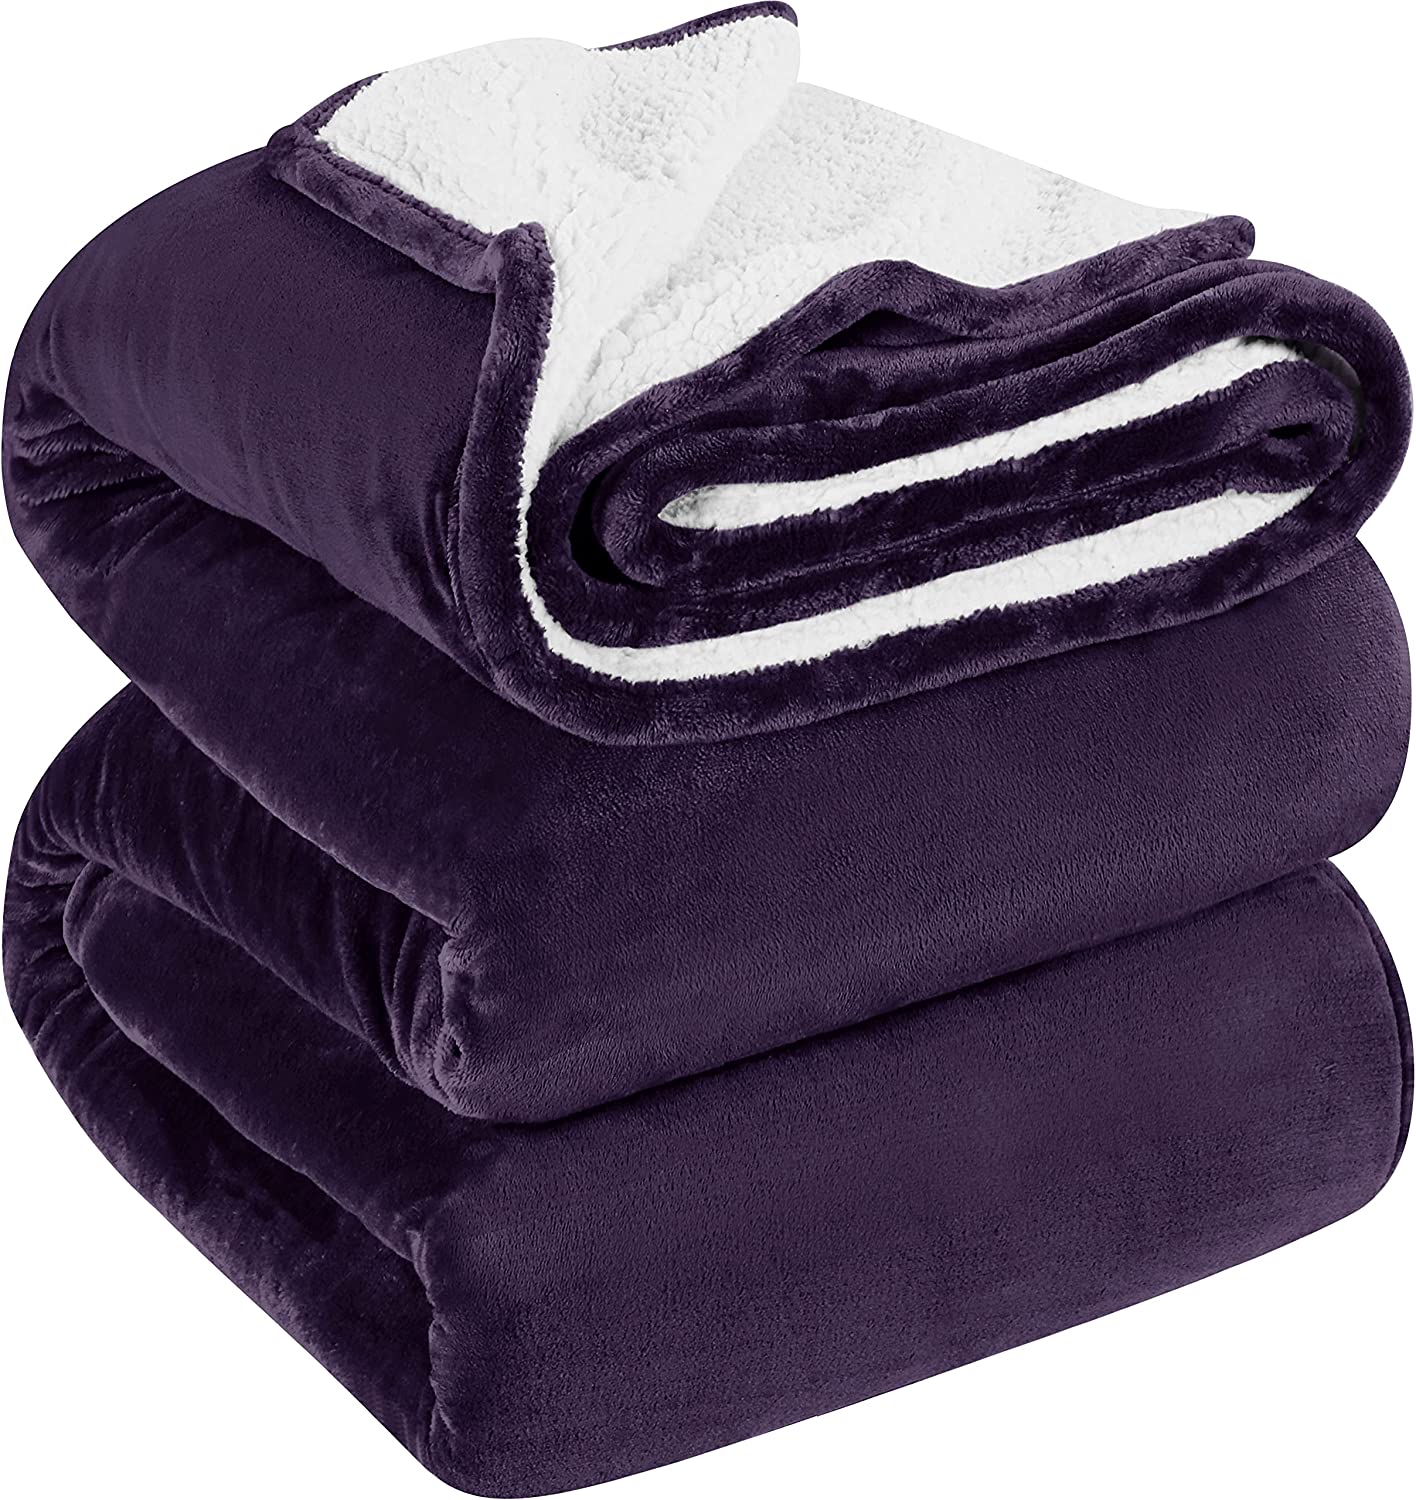 Utopia Bedding Fleece Blanket Throw Size Purple 300GSM Luxury Blanket for  Couch